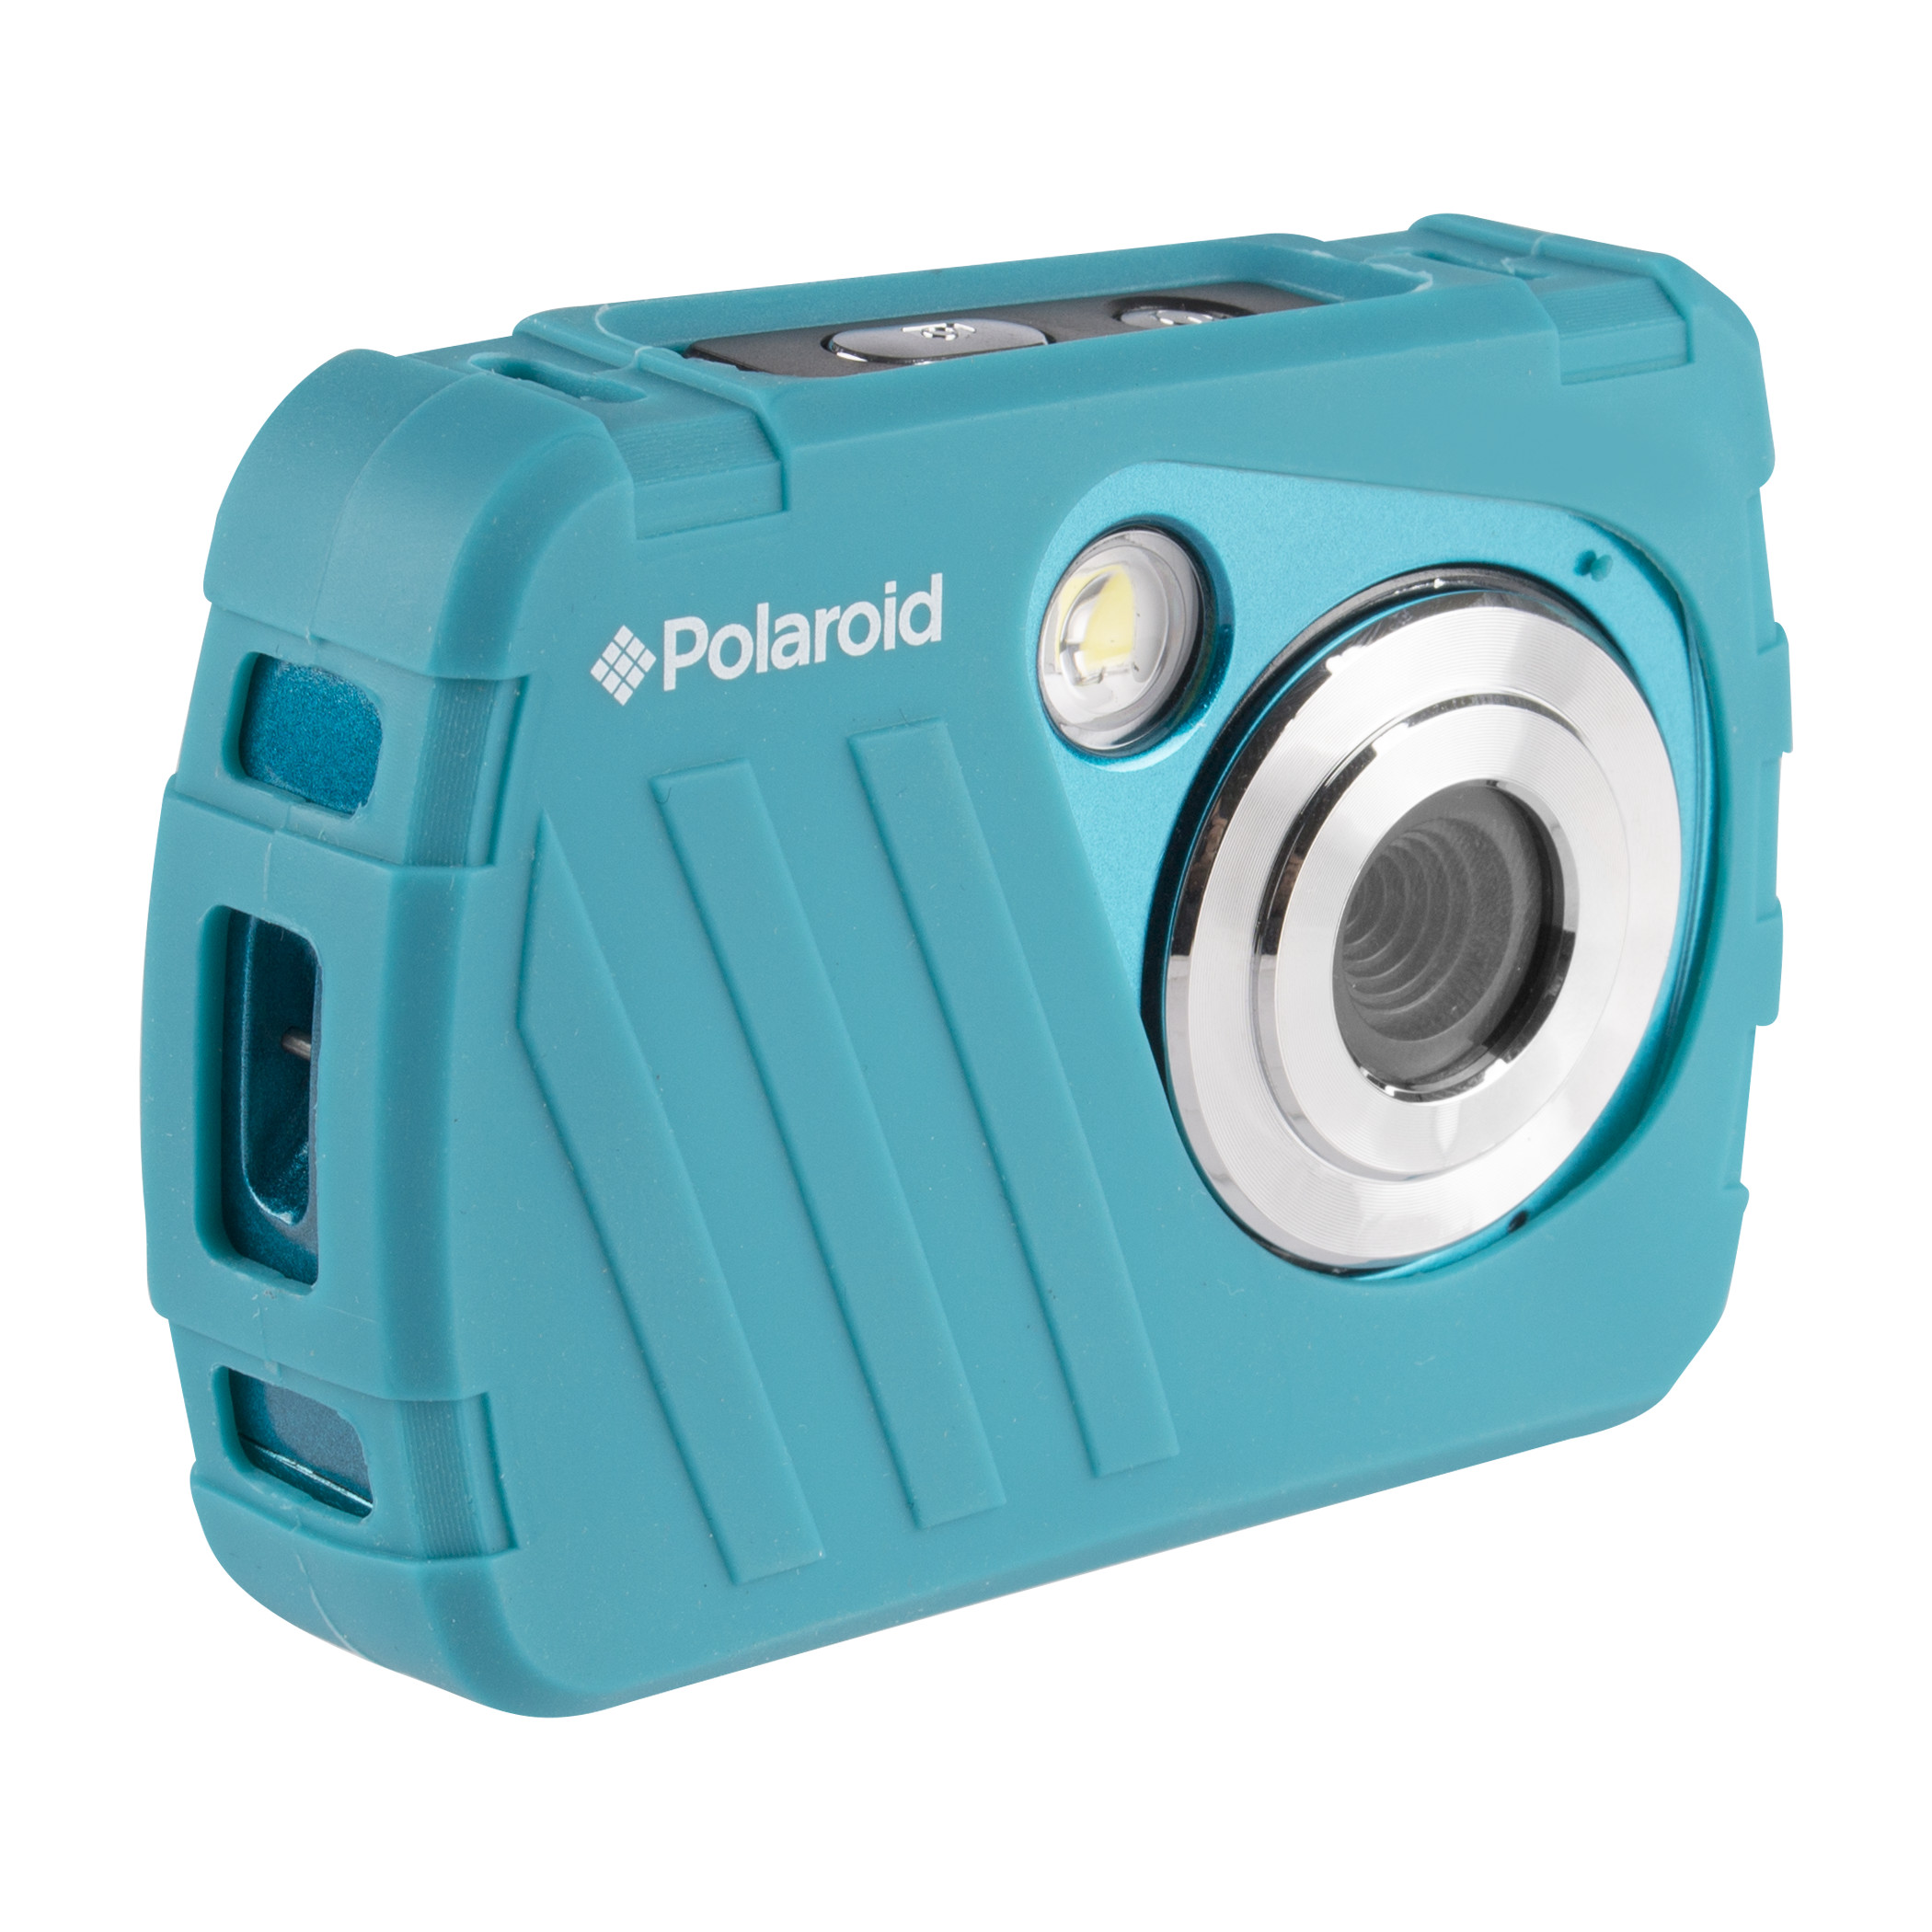 Polaroid 16MP Waterproof Instant Sharing Digital Camera - image 5 of 7